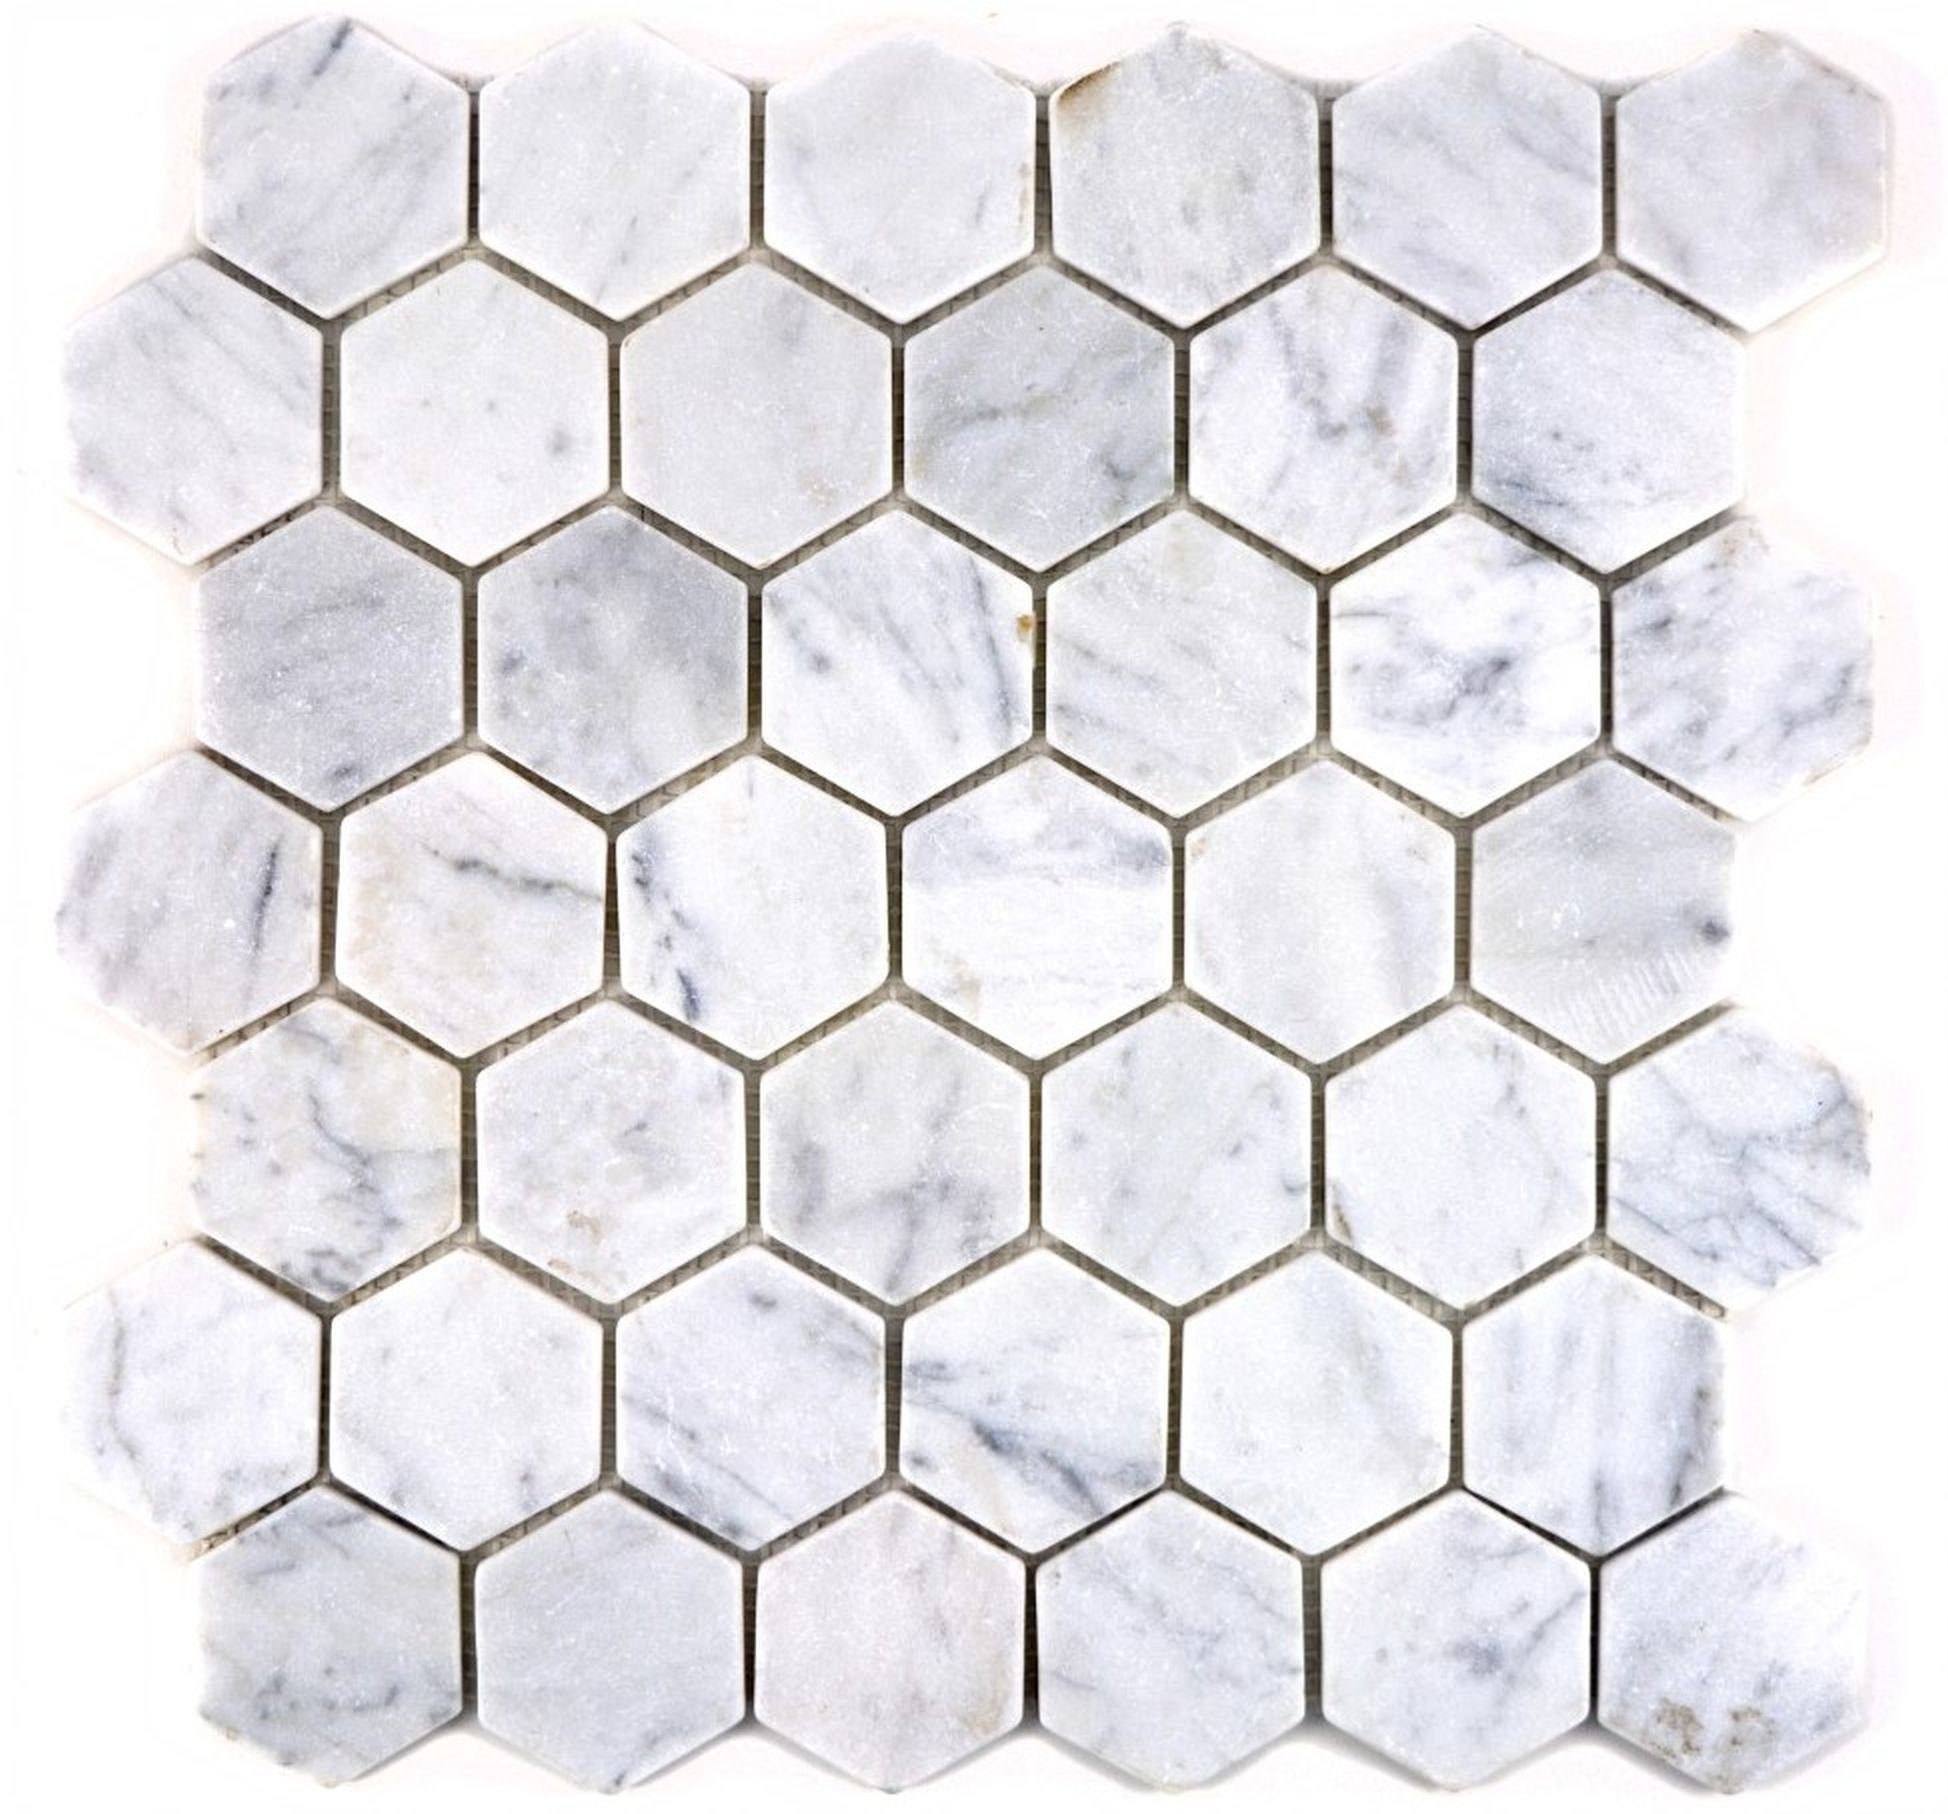 Mosani Mosaikfliesen Marmor Mosaik Fliese Naturstein Hexagon weiß anthrazit Carrara